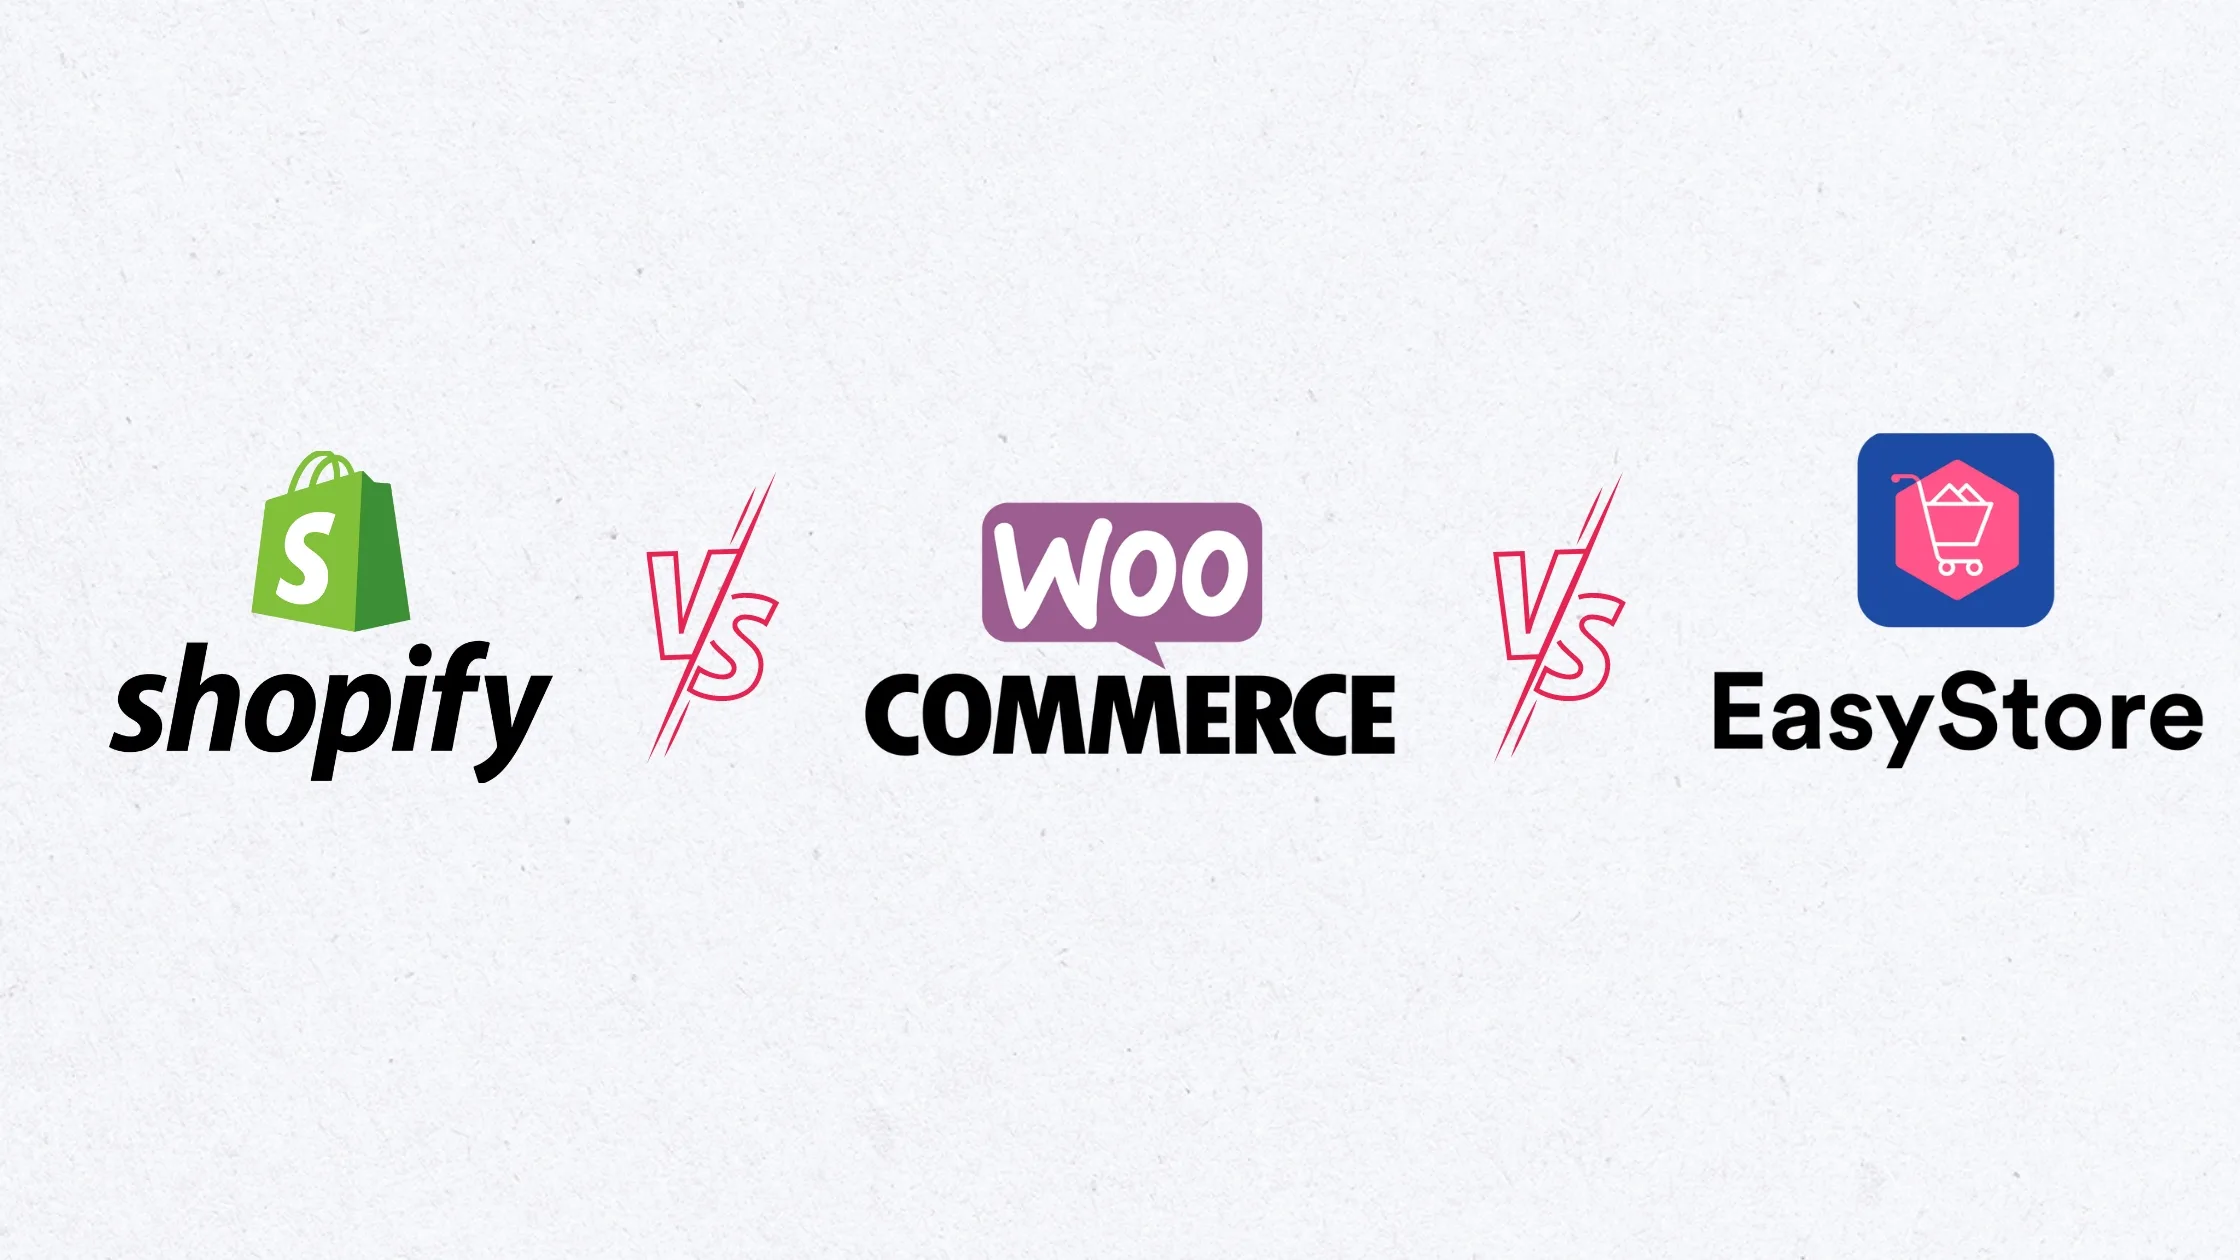 Shopify vs WooCommerce vs EasyStore image